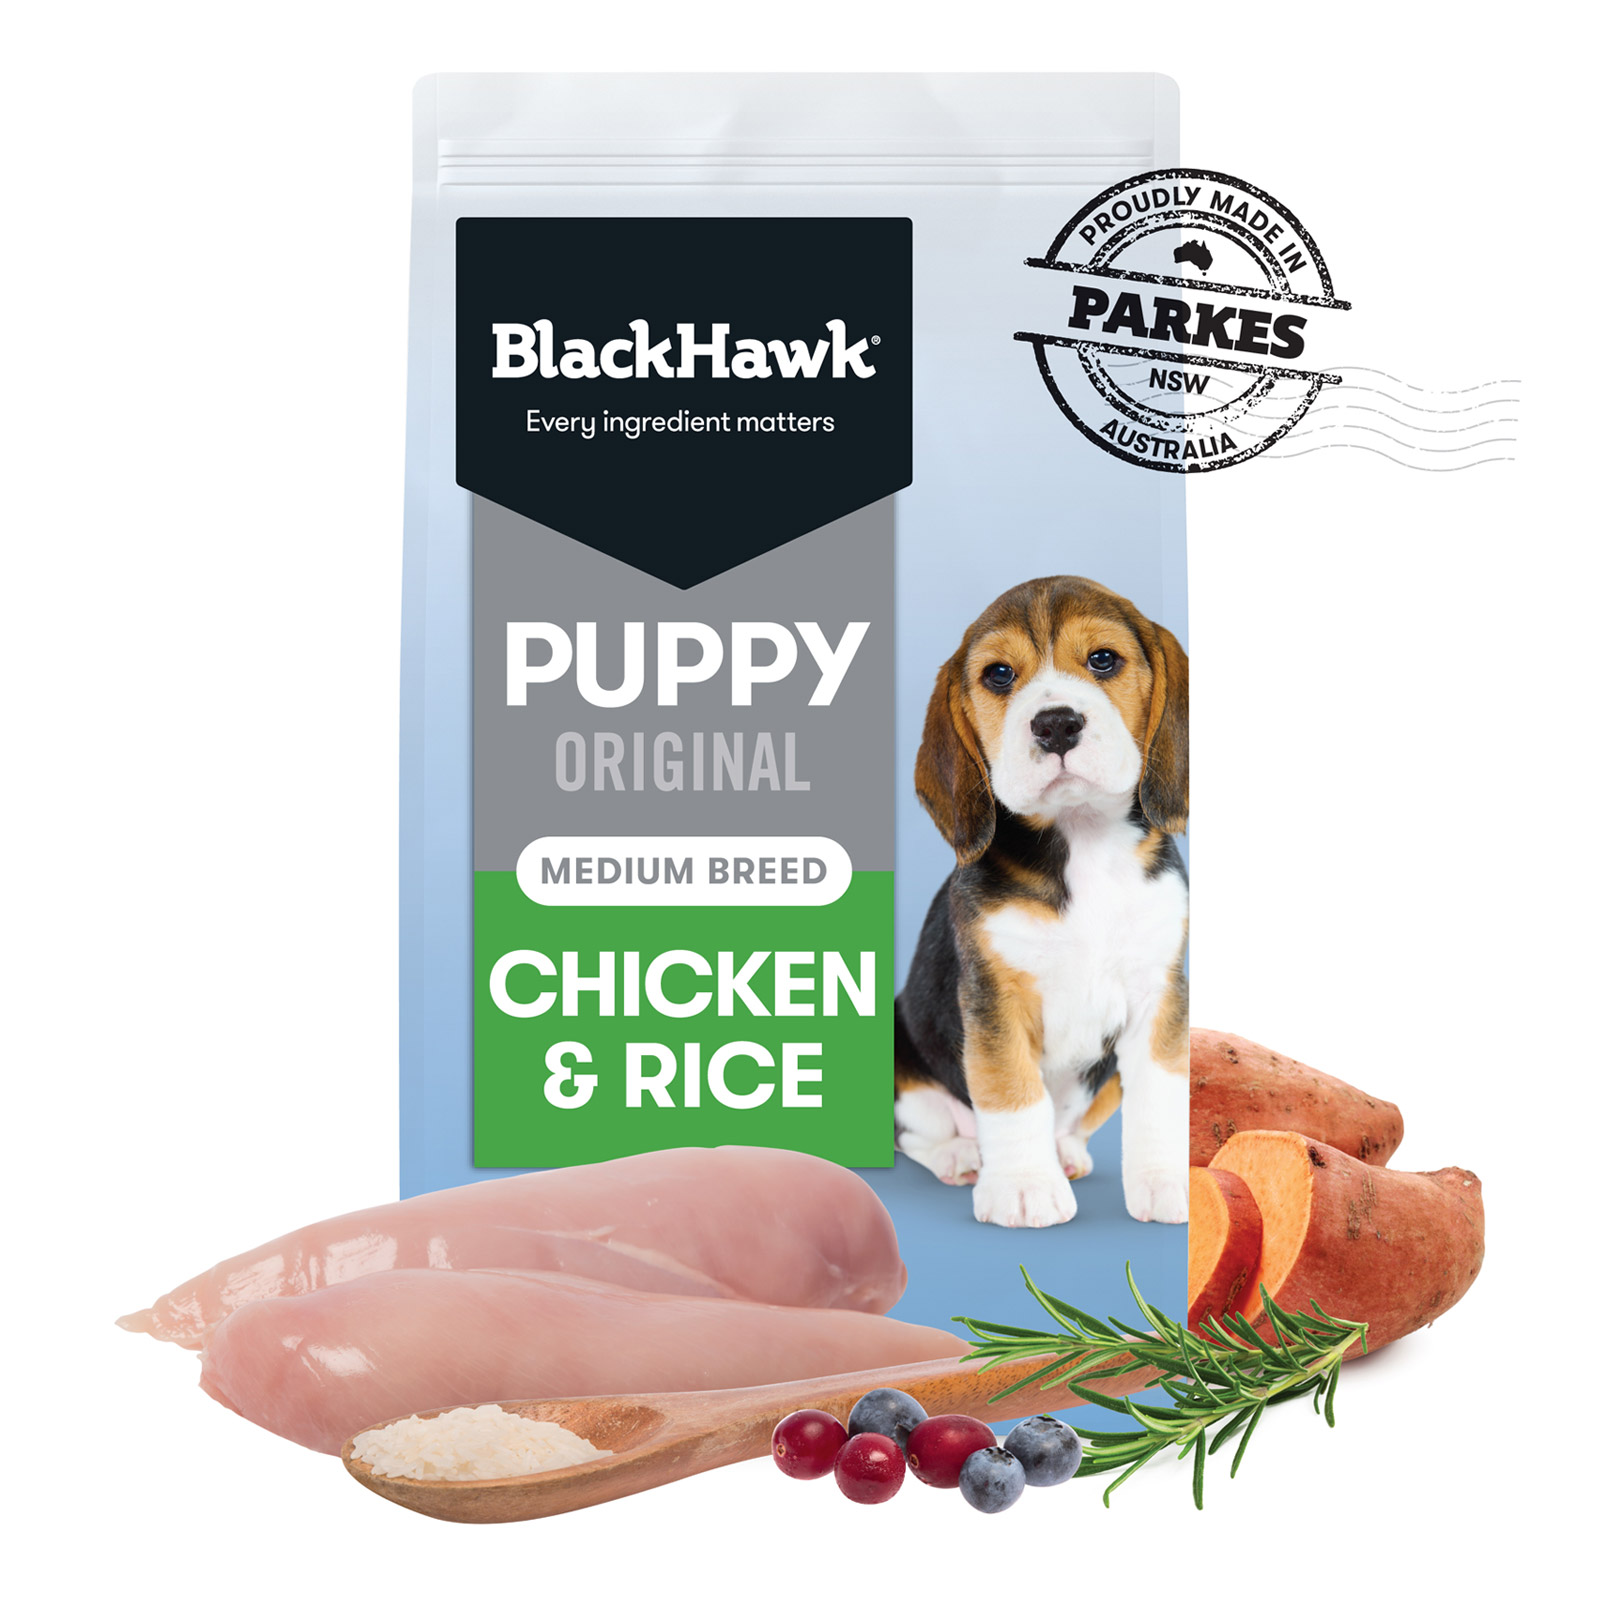 Black Hawk Puppy Original Medium Breed Chicken and Rice for Food